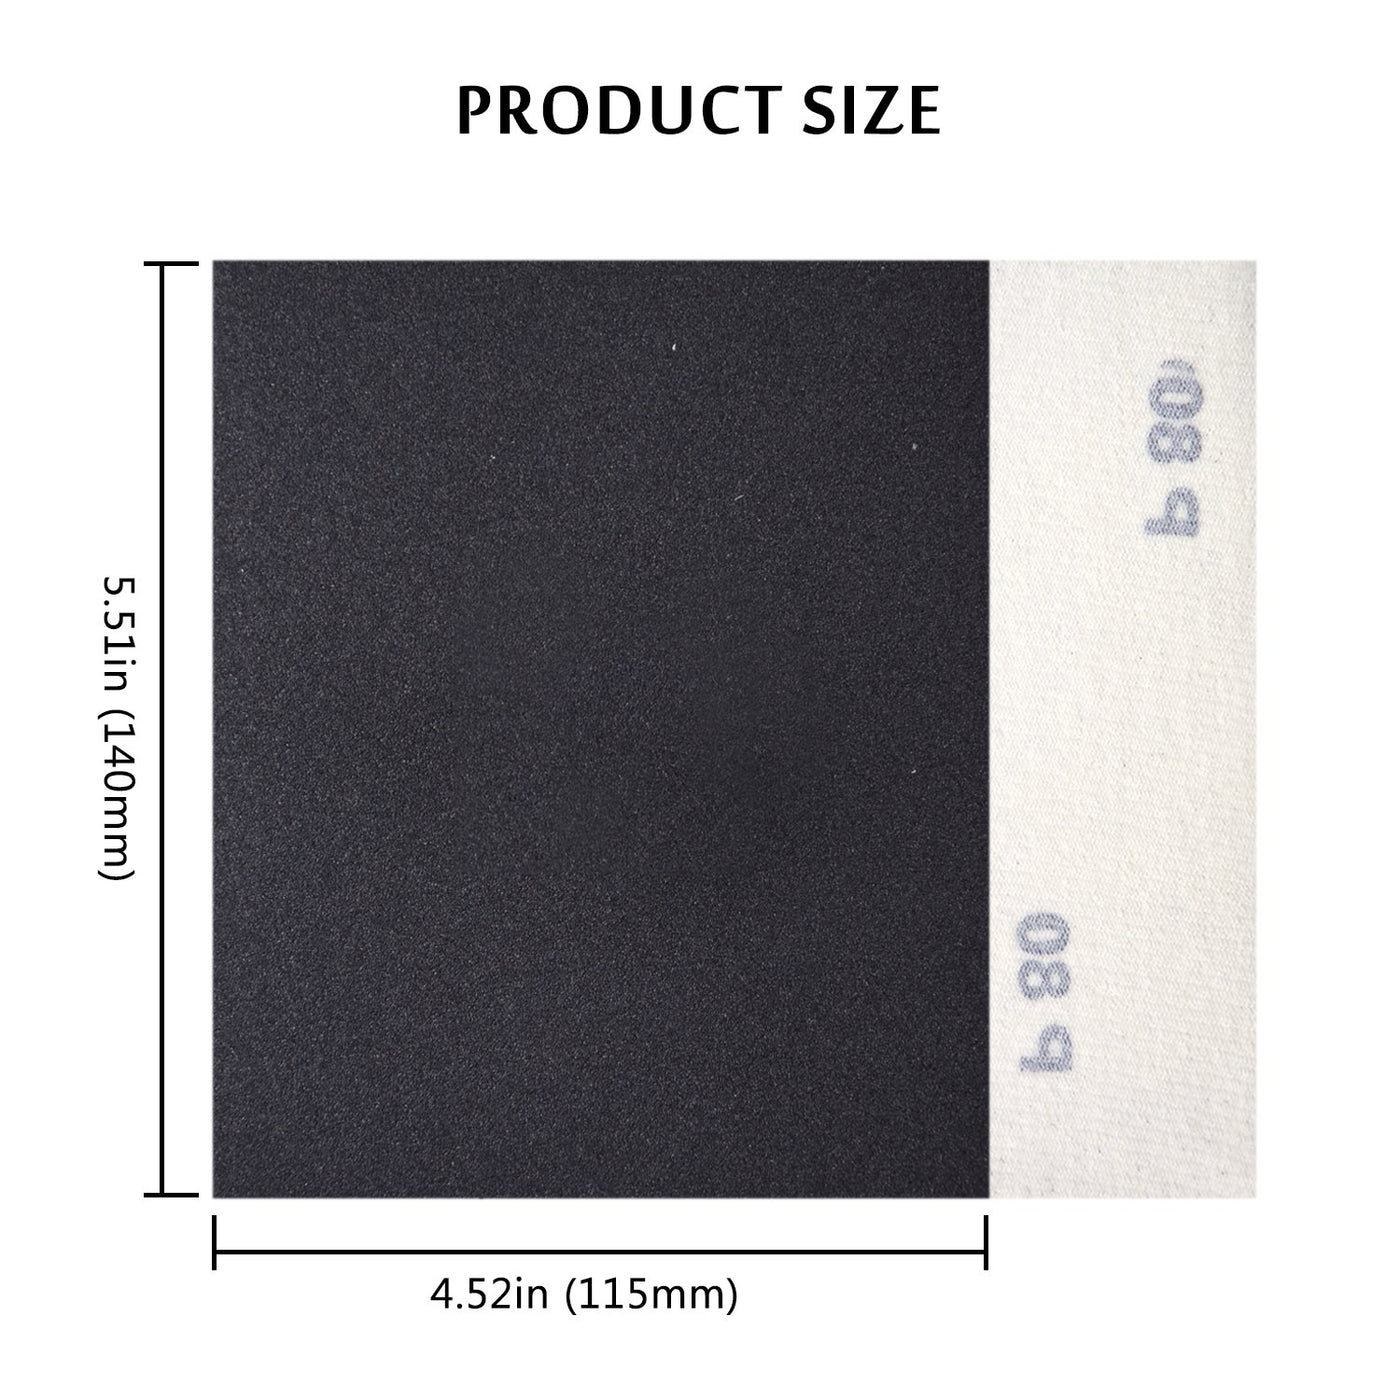 5.5 x 4.5 inch (140 x 115mm) Sanding Sheets